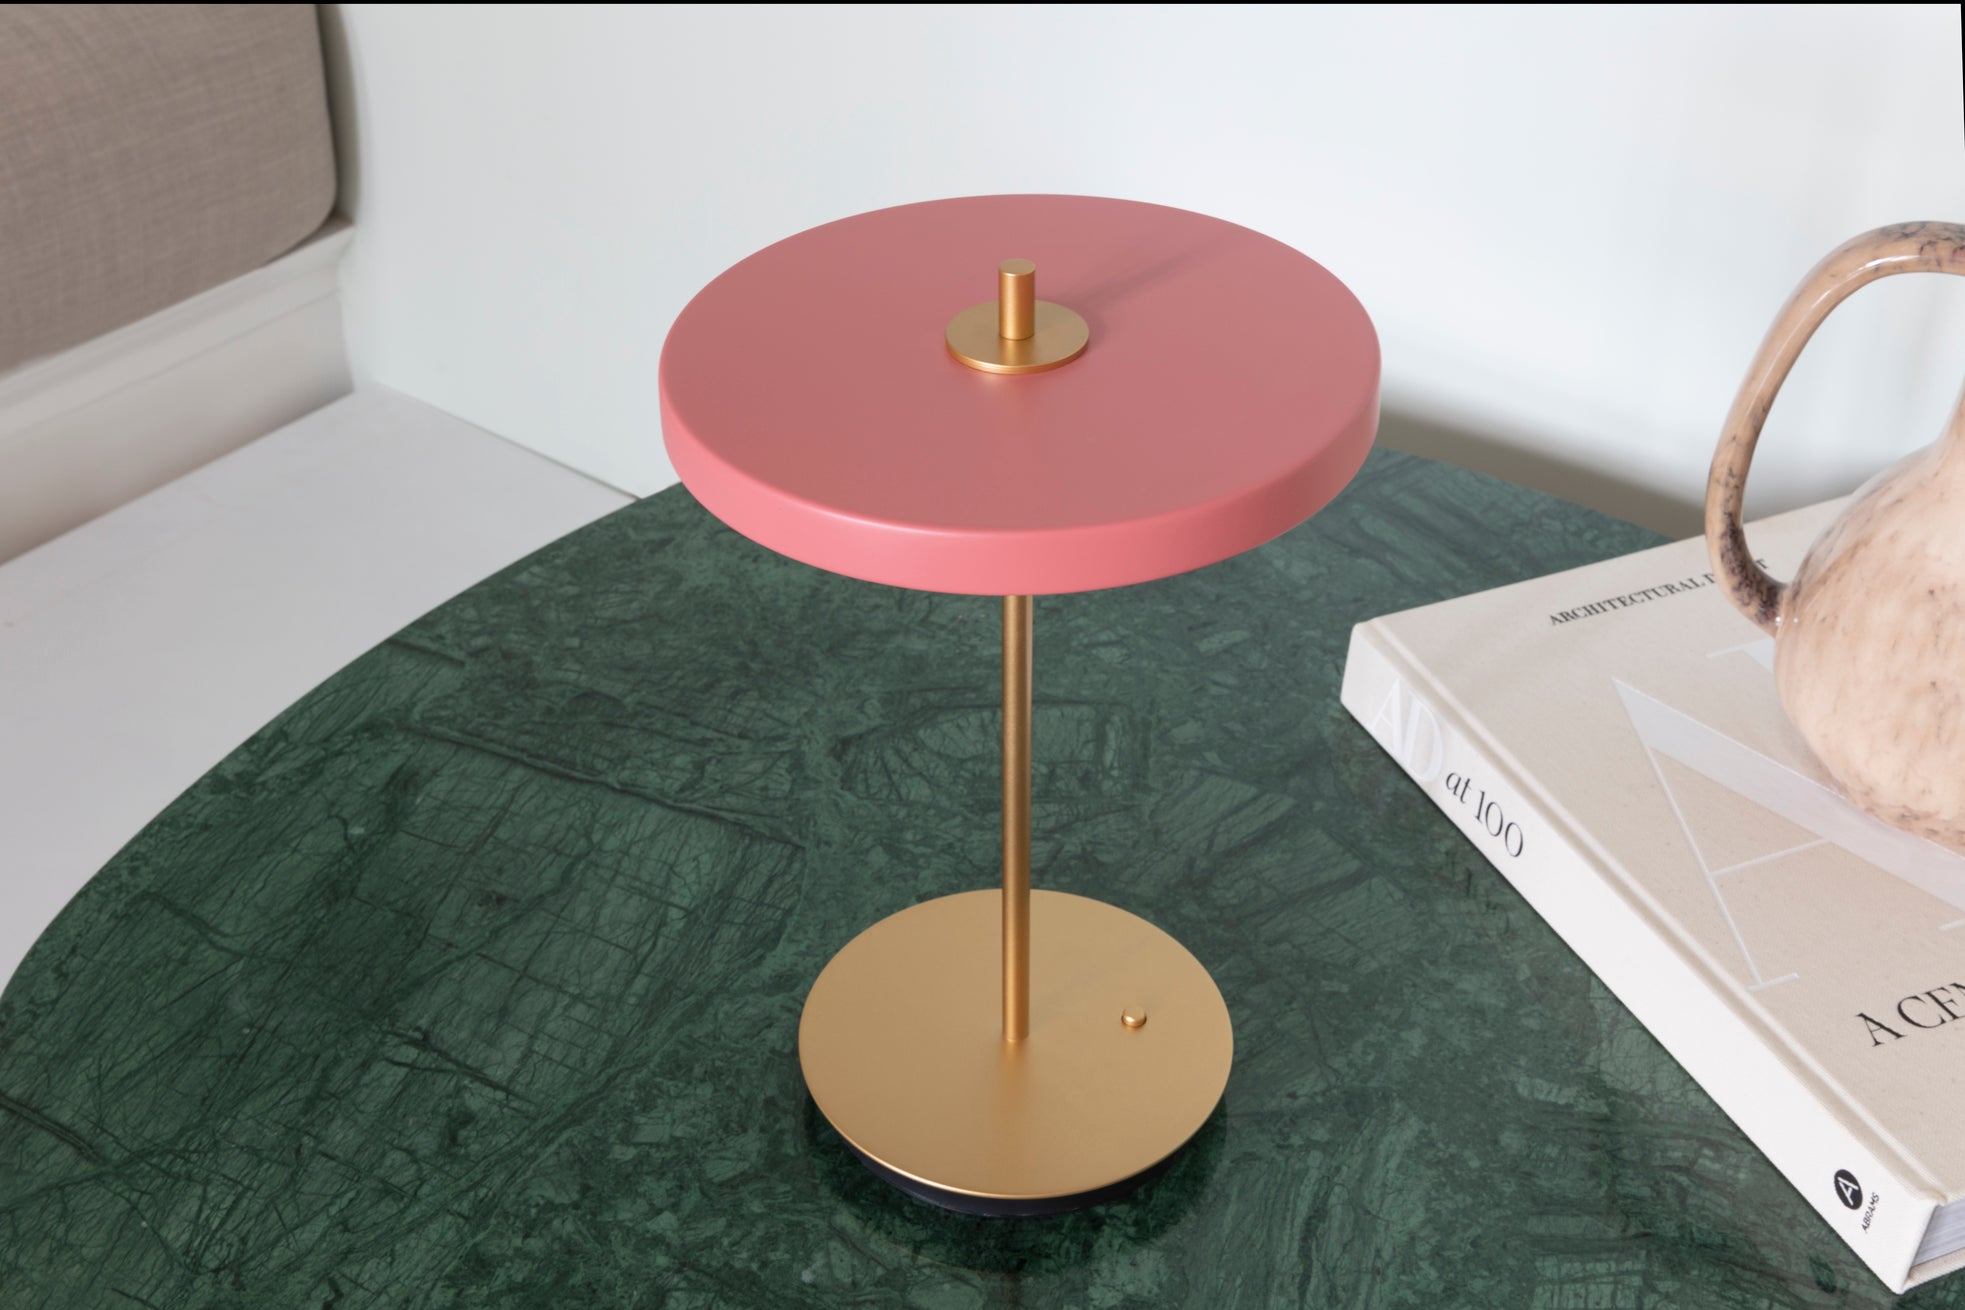 Umage Asteria Move Table Lamp, Nuance Rose V2